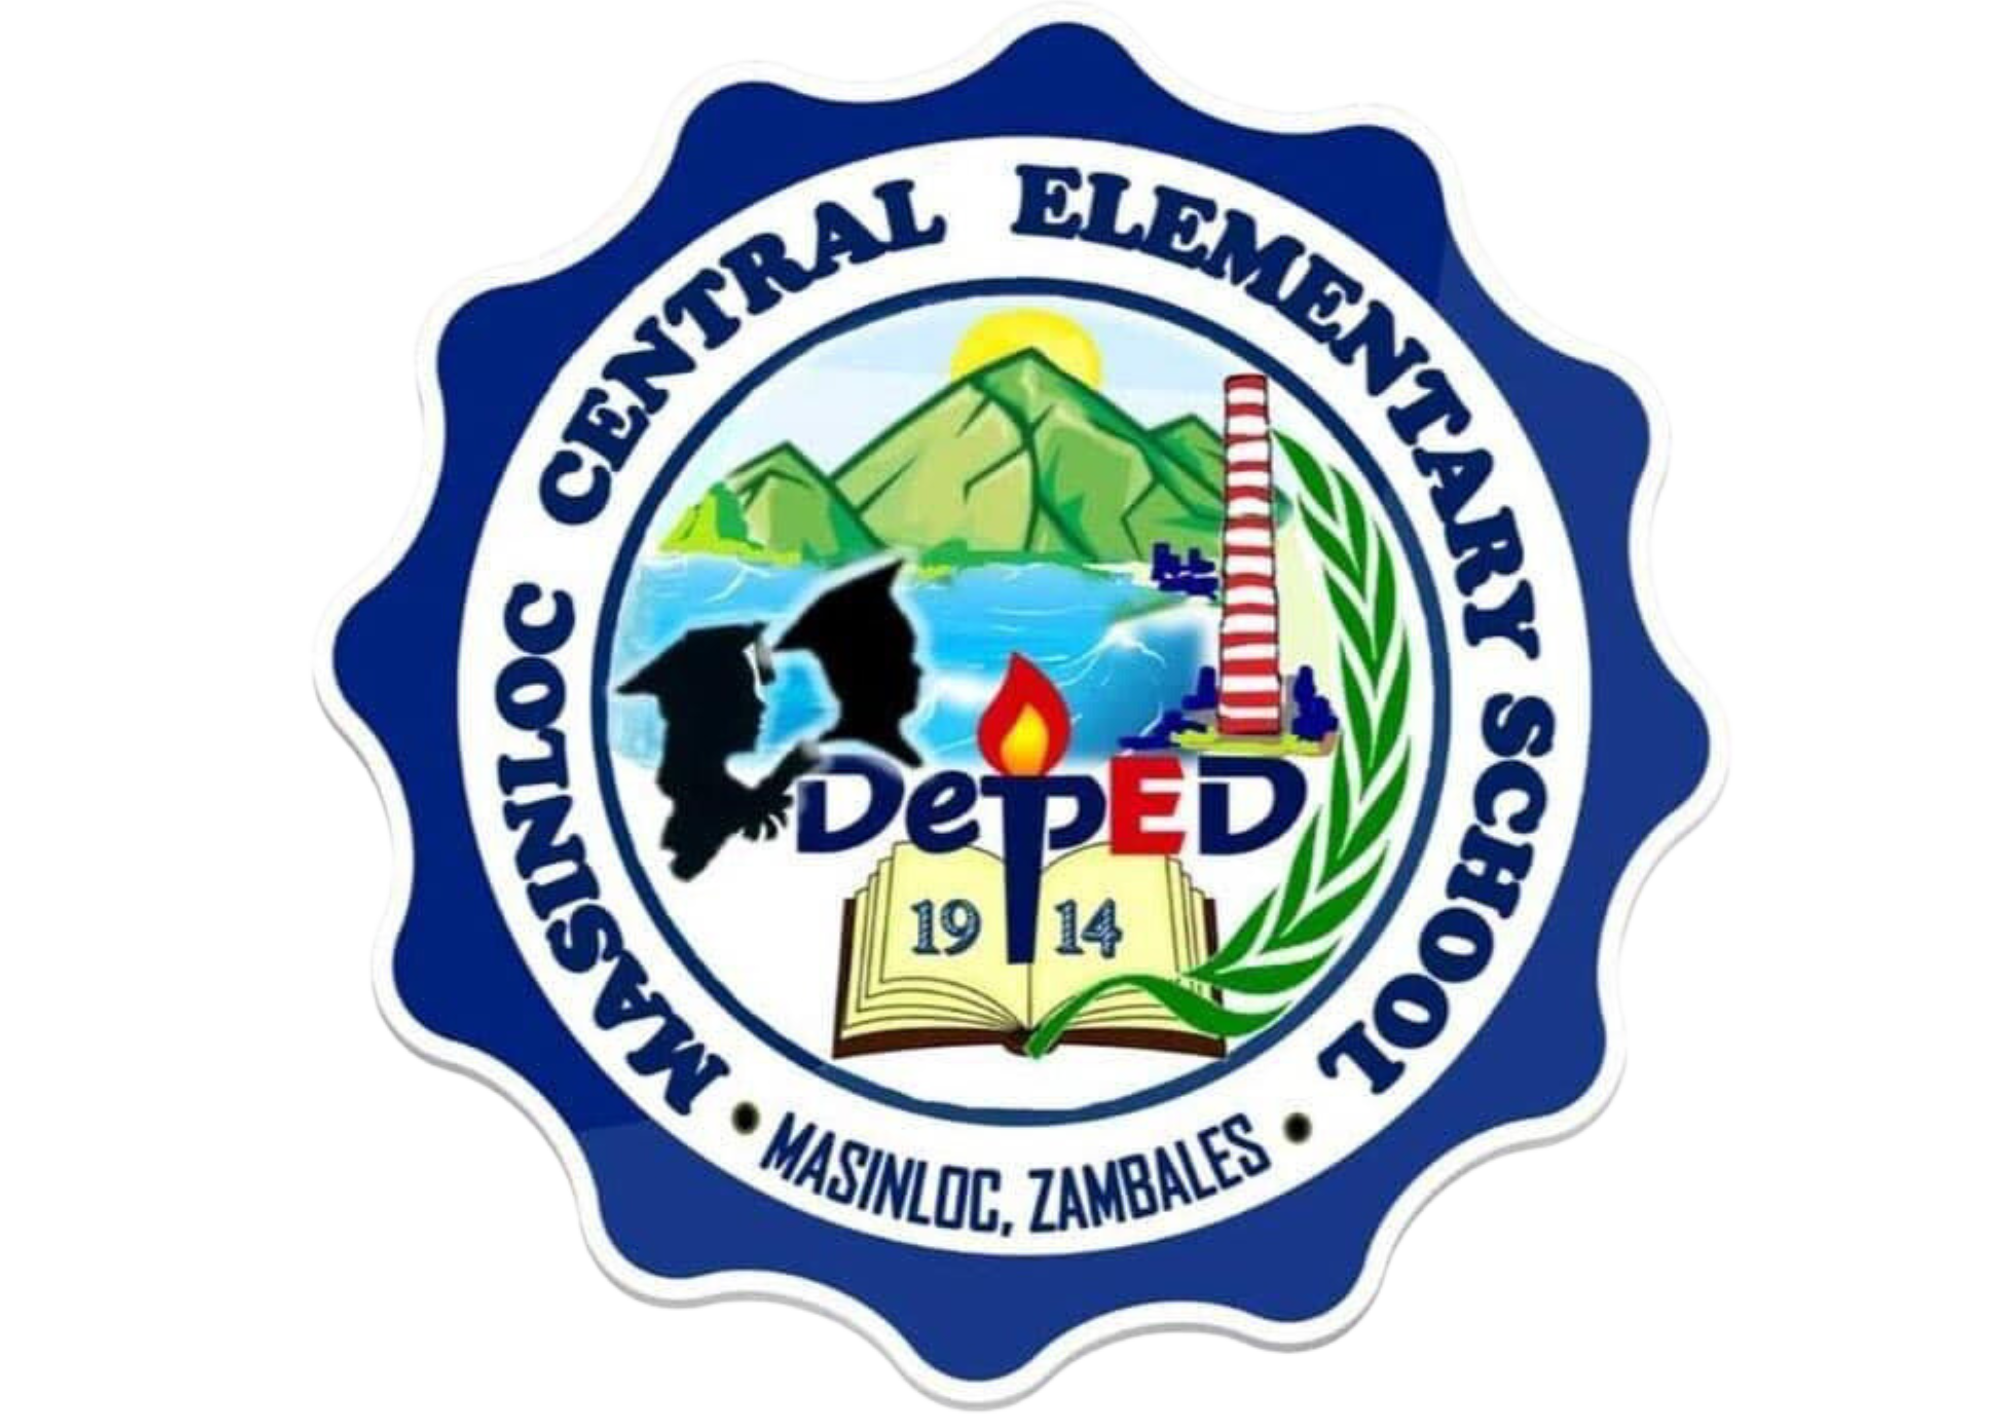 Masinloc Central Elementary School Official Logo